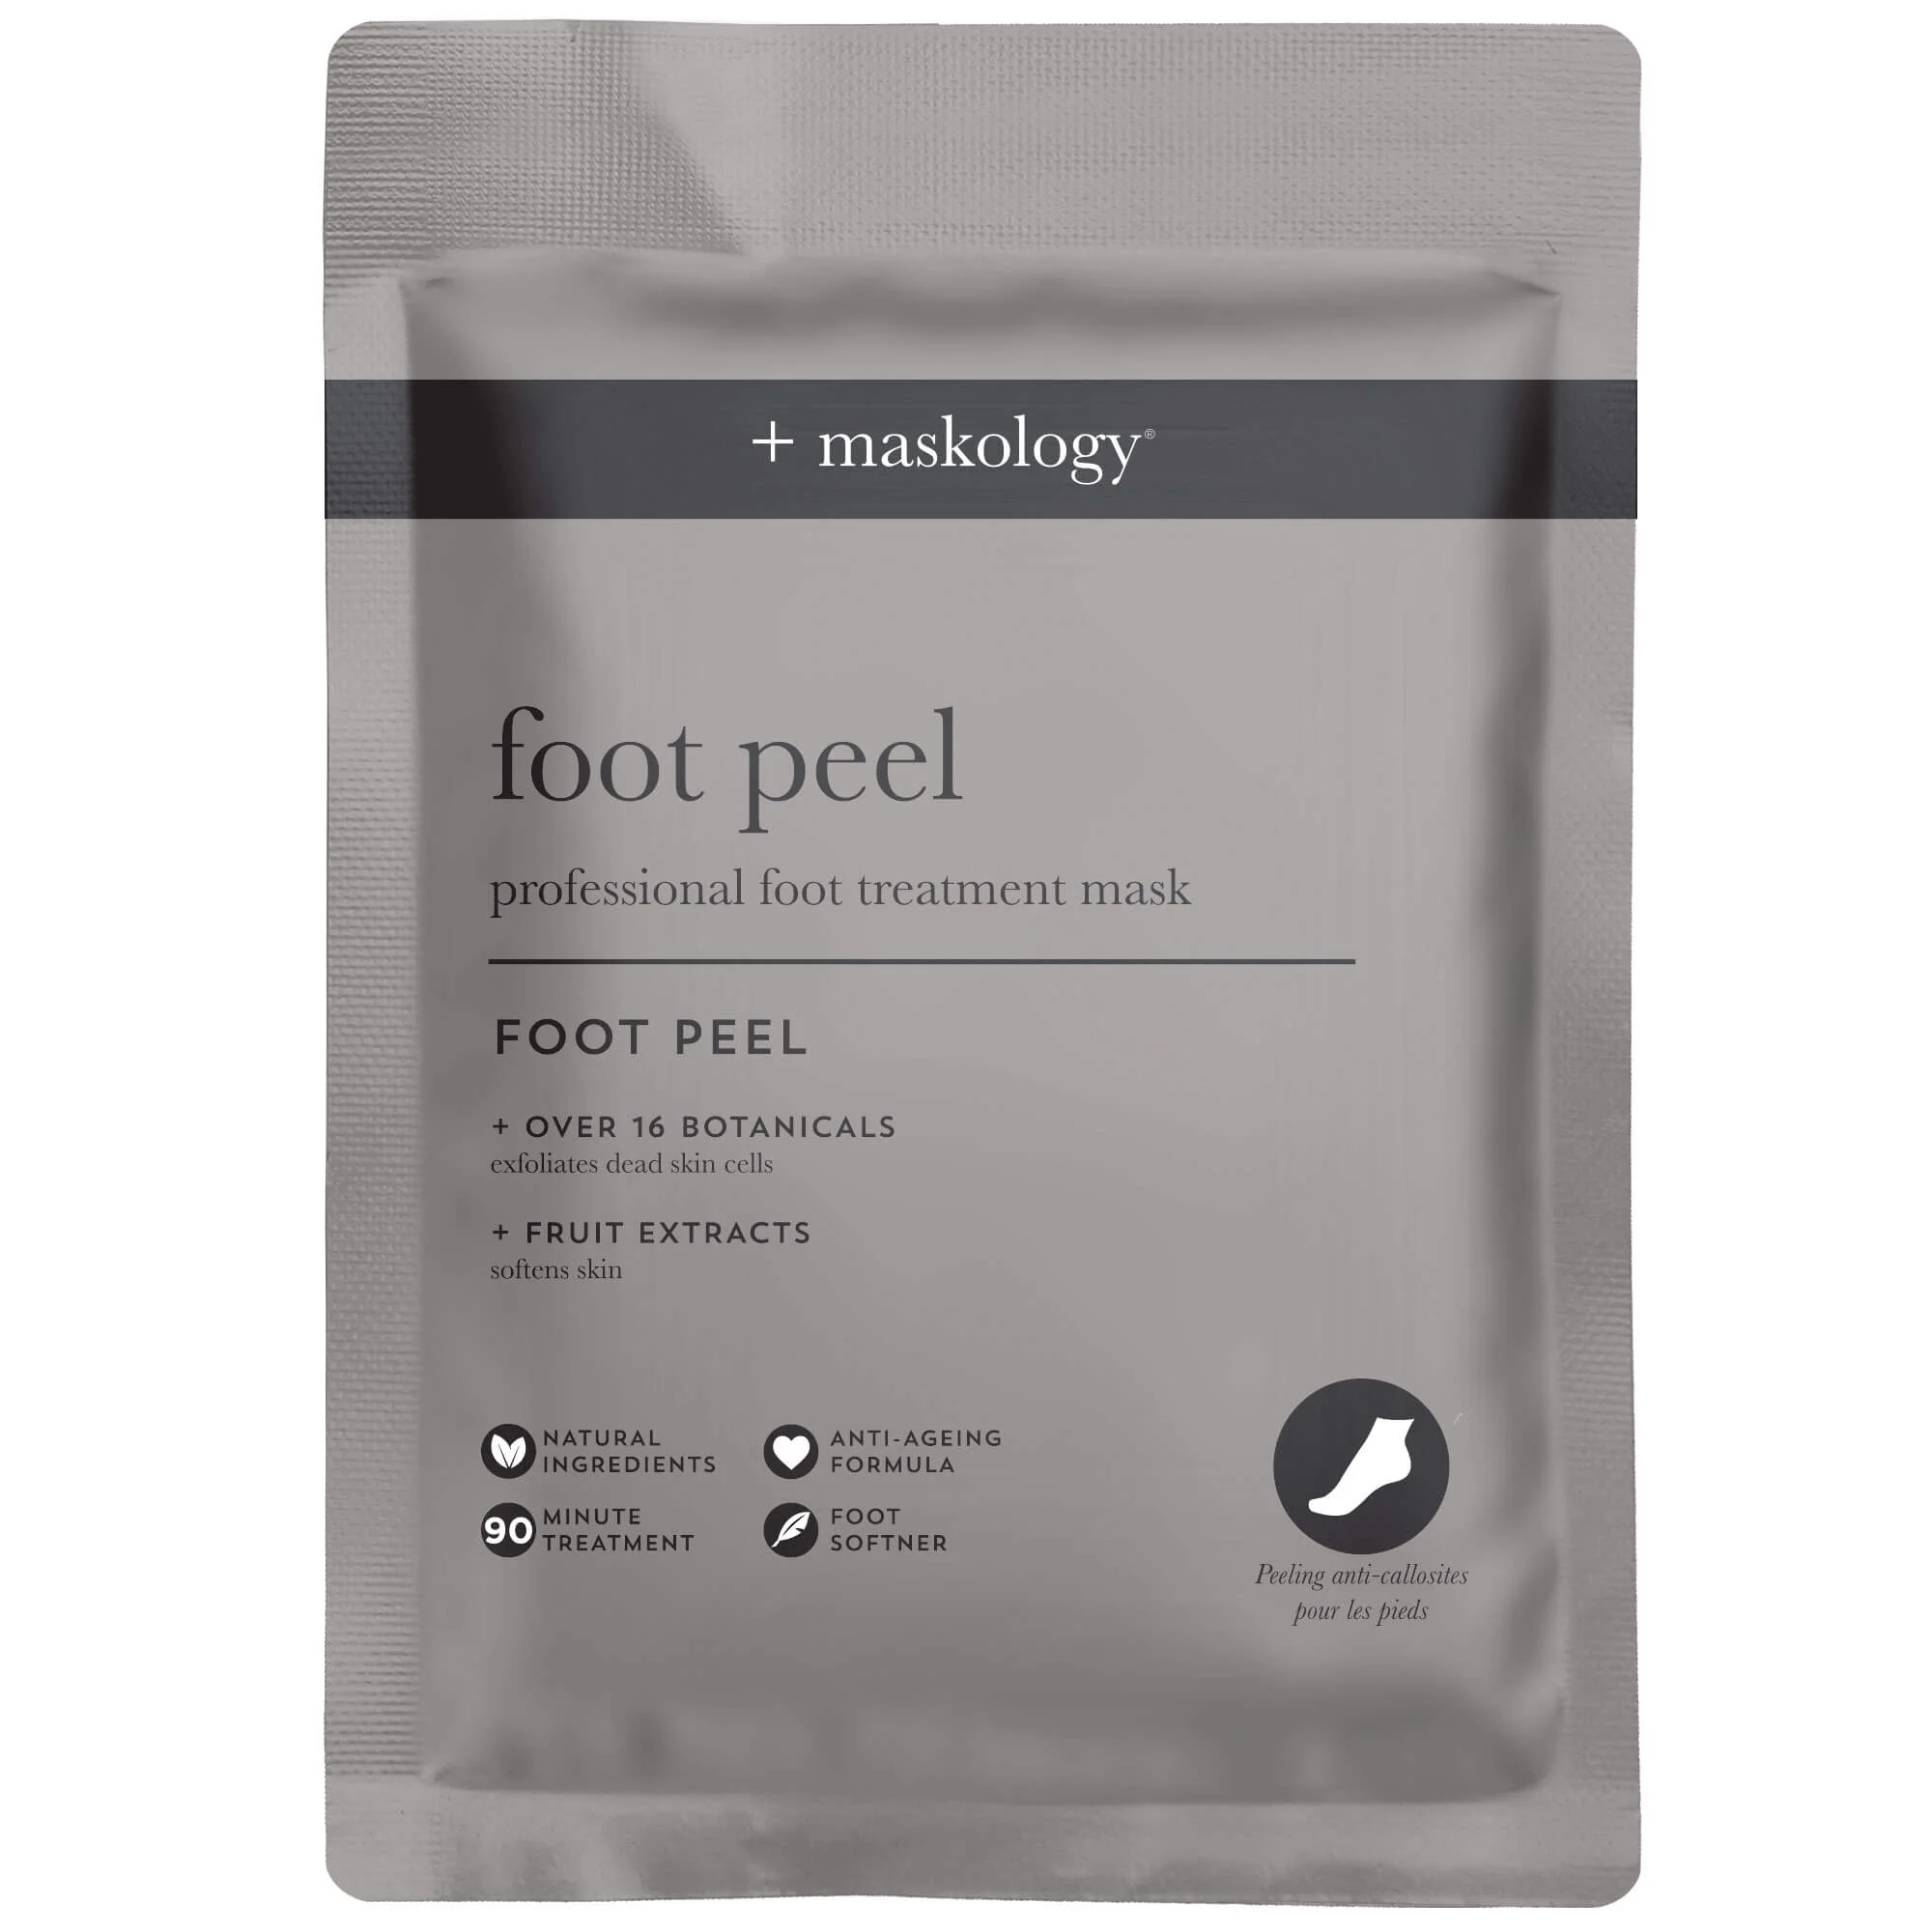 Maskology Foot Peel Professional Foot Treatment Mask